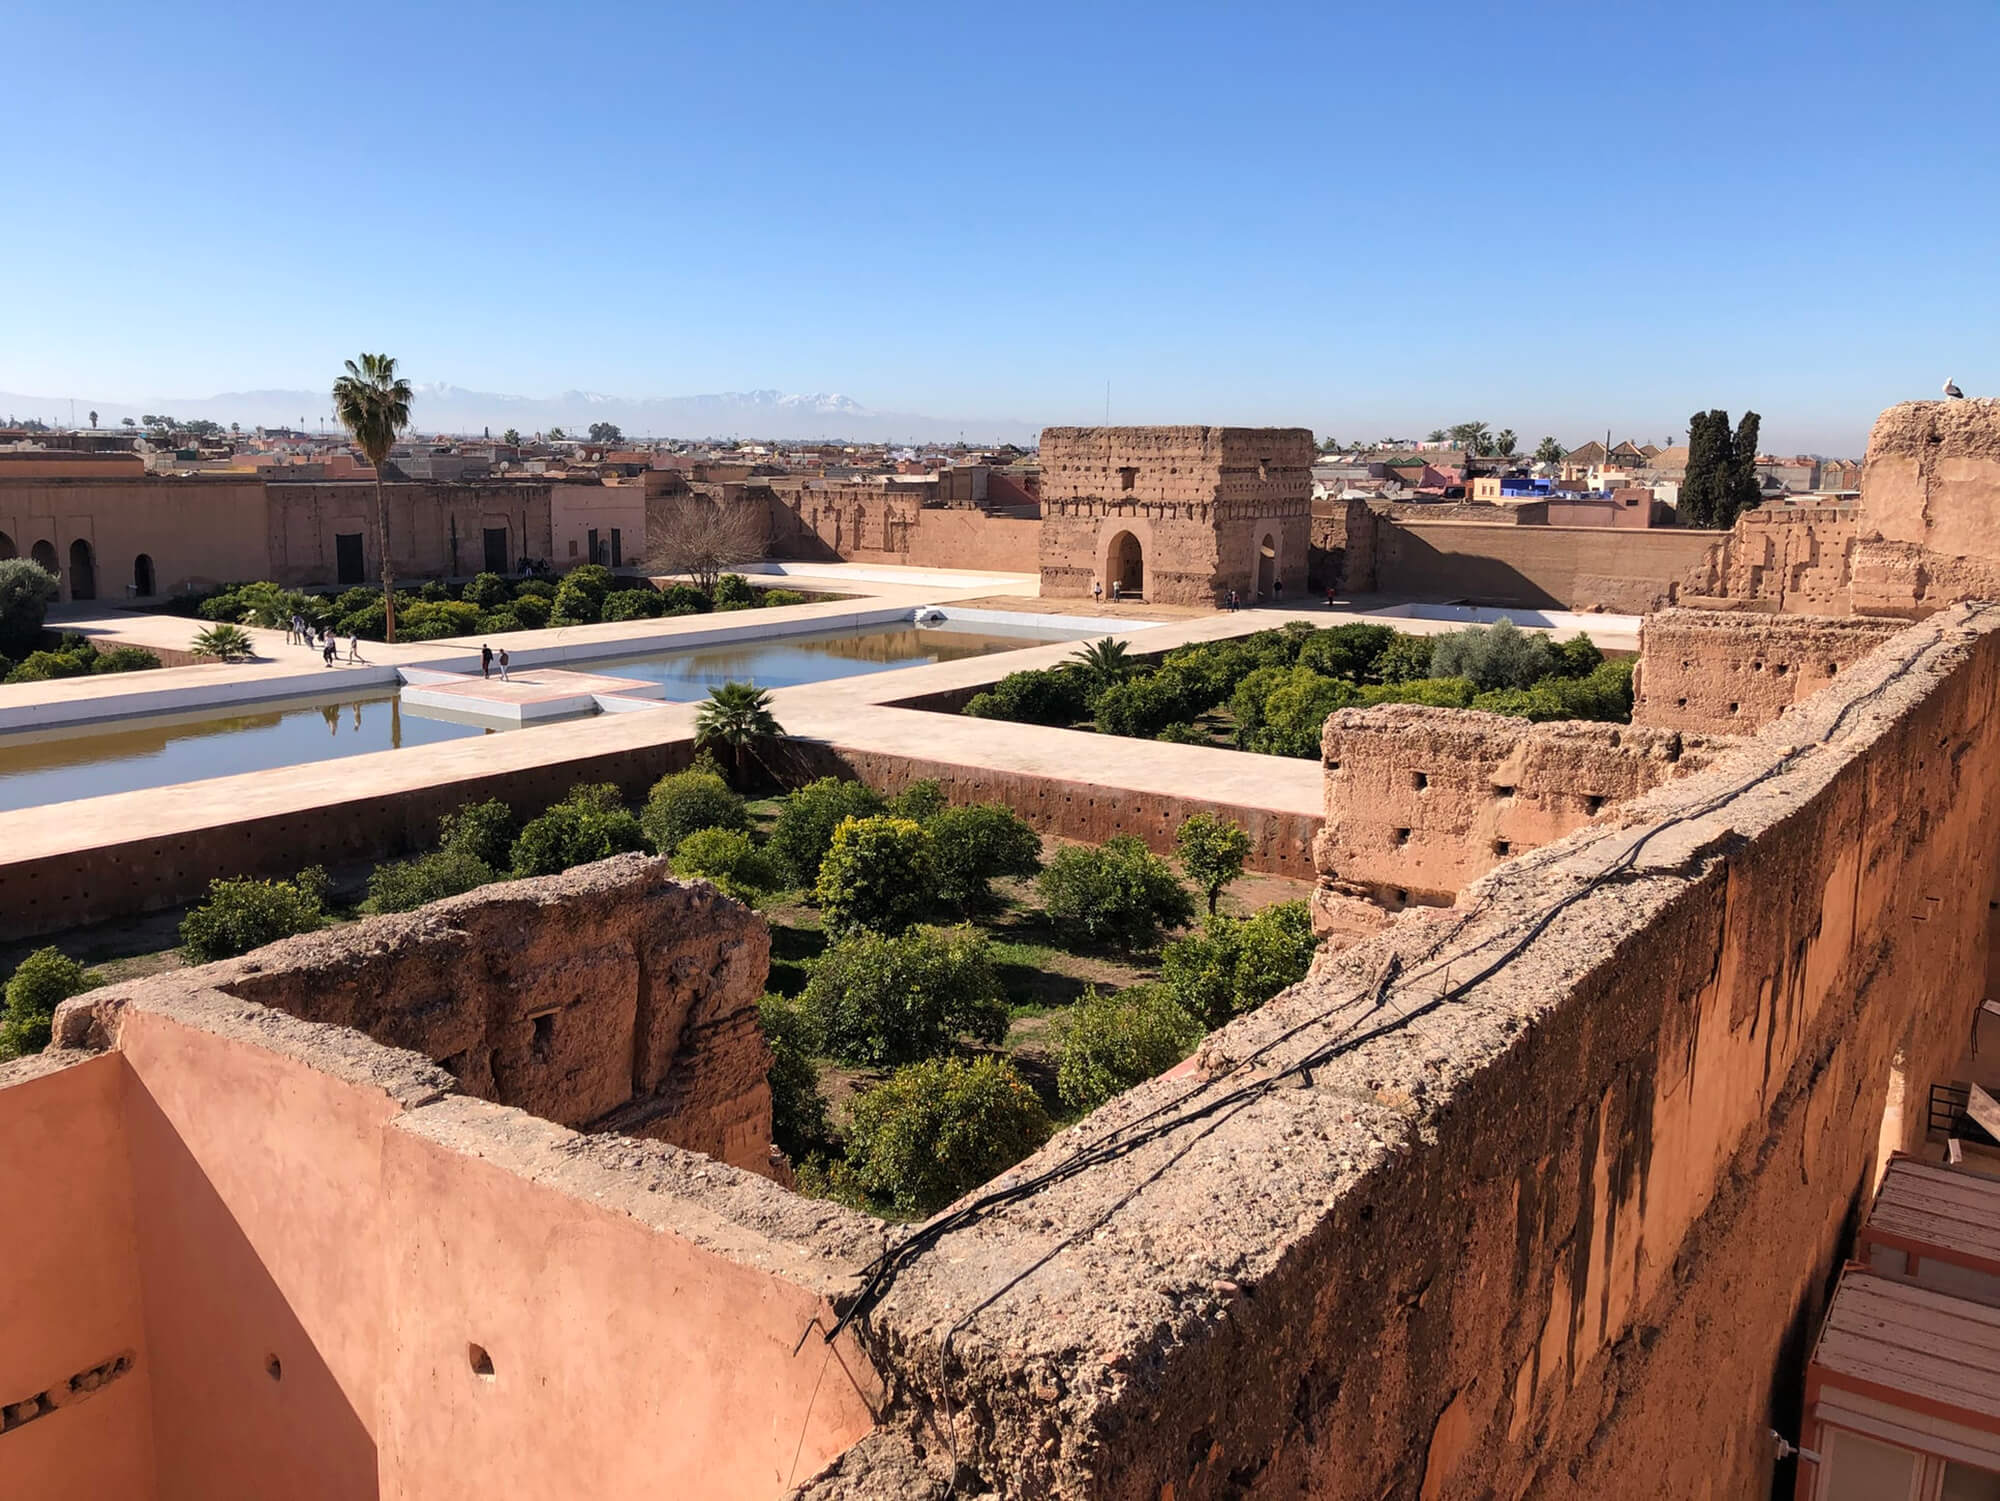 Sahara Desert Tour - Tap into the Magic of Marrakech where Old Meets New - El Badi Palace Ruins